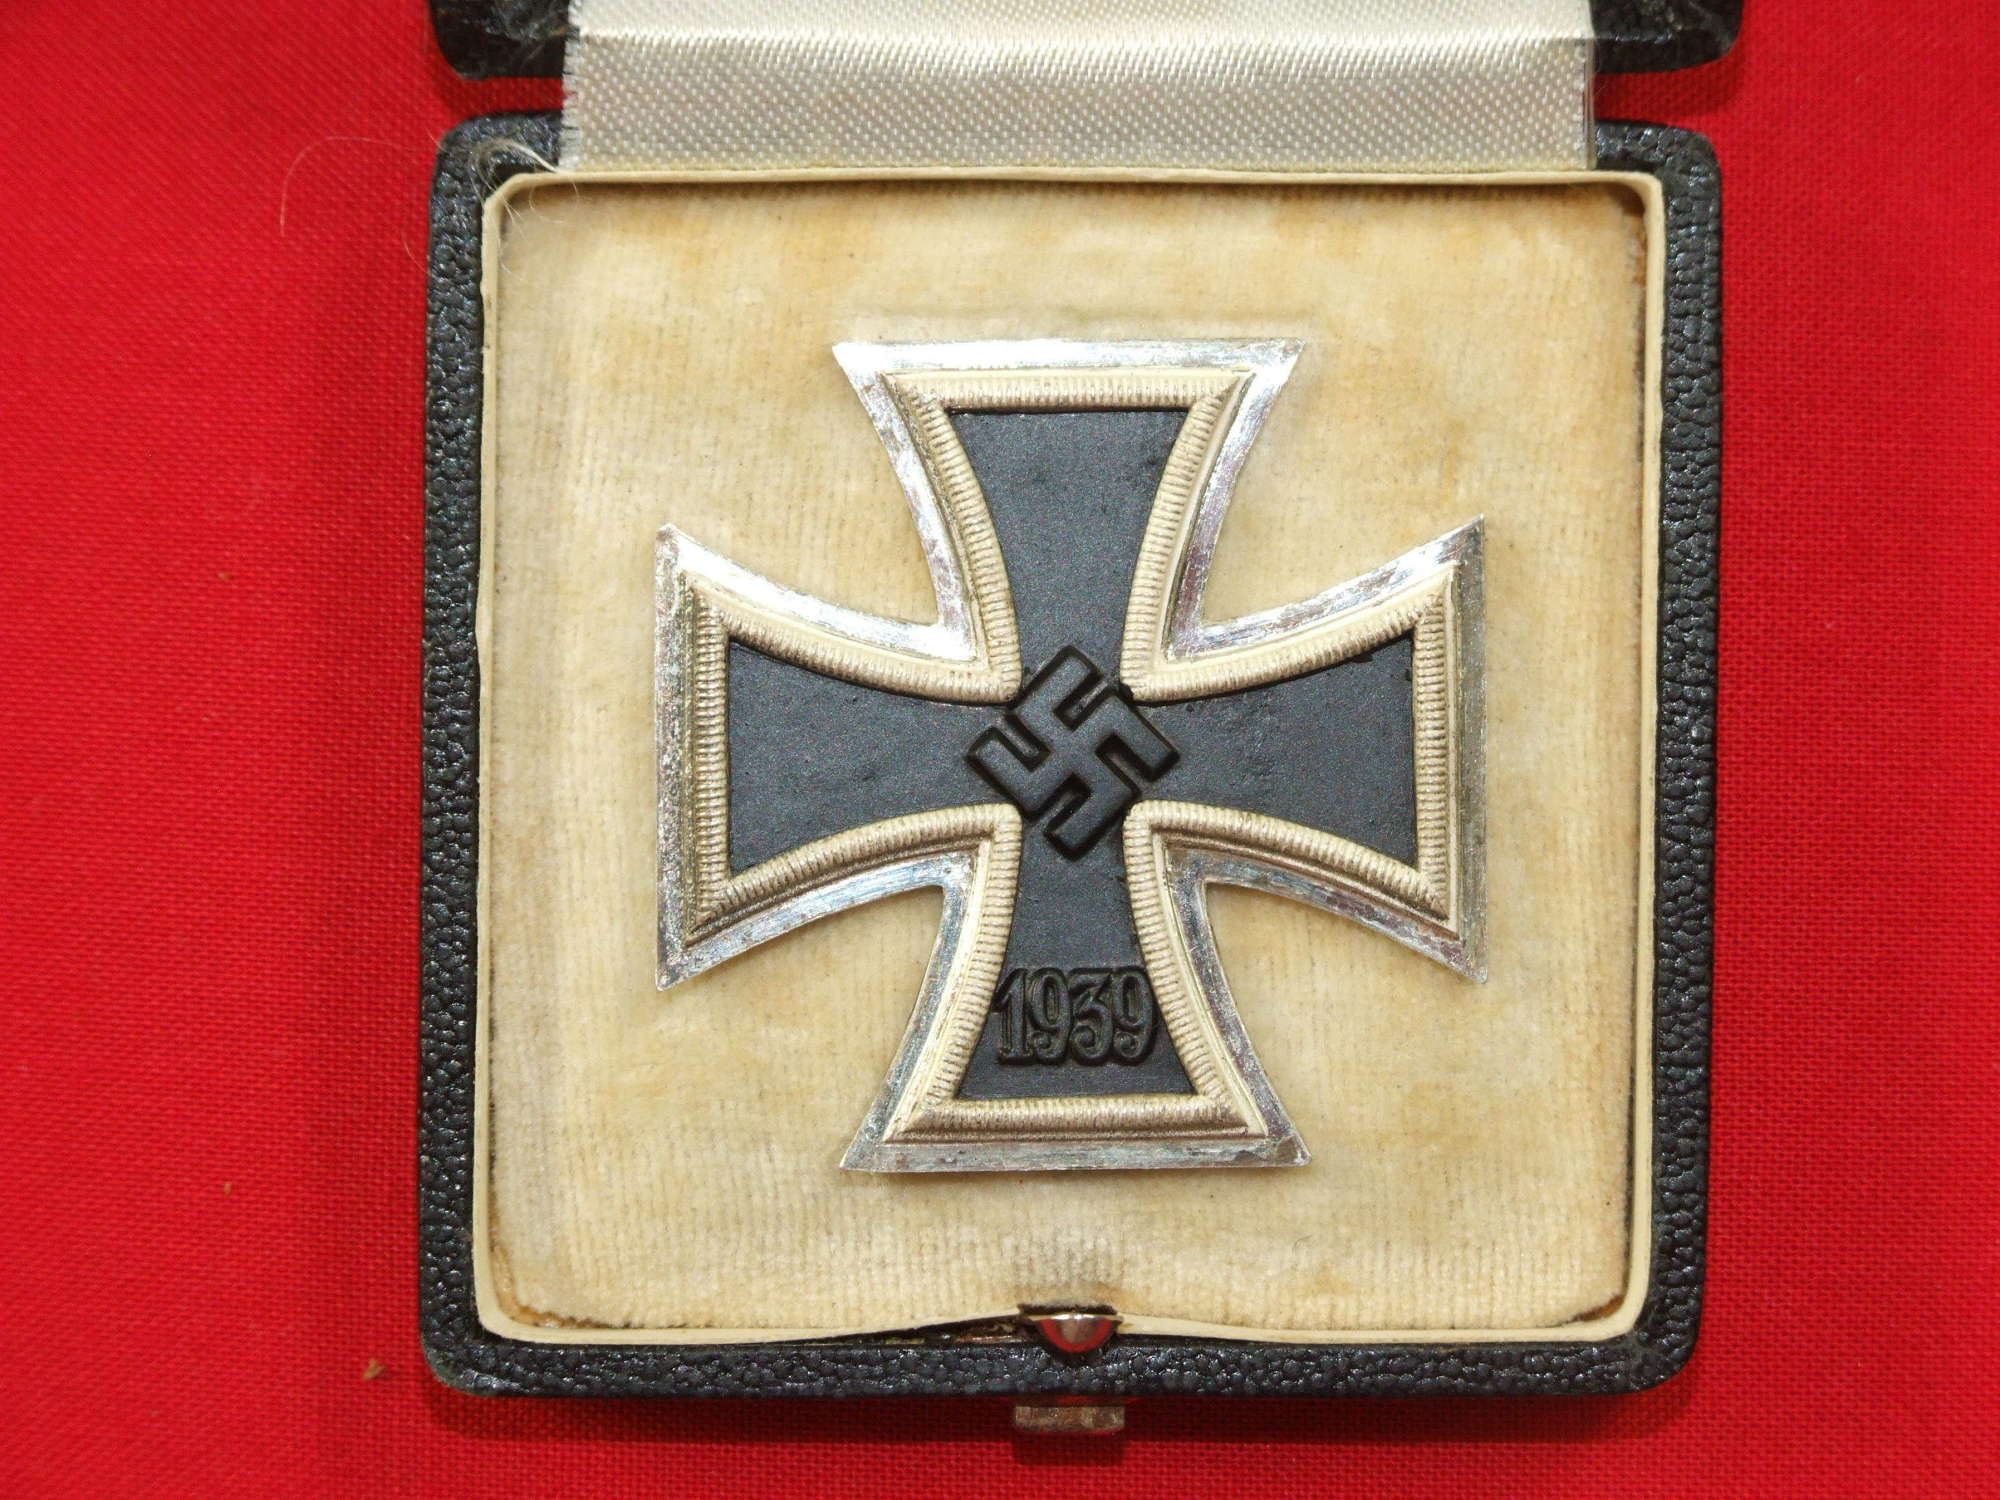 Cased 1939 iron Cross by B.H. Mayer